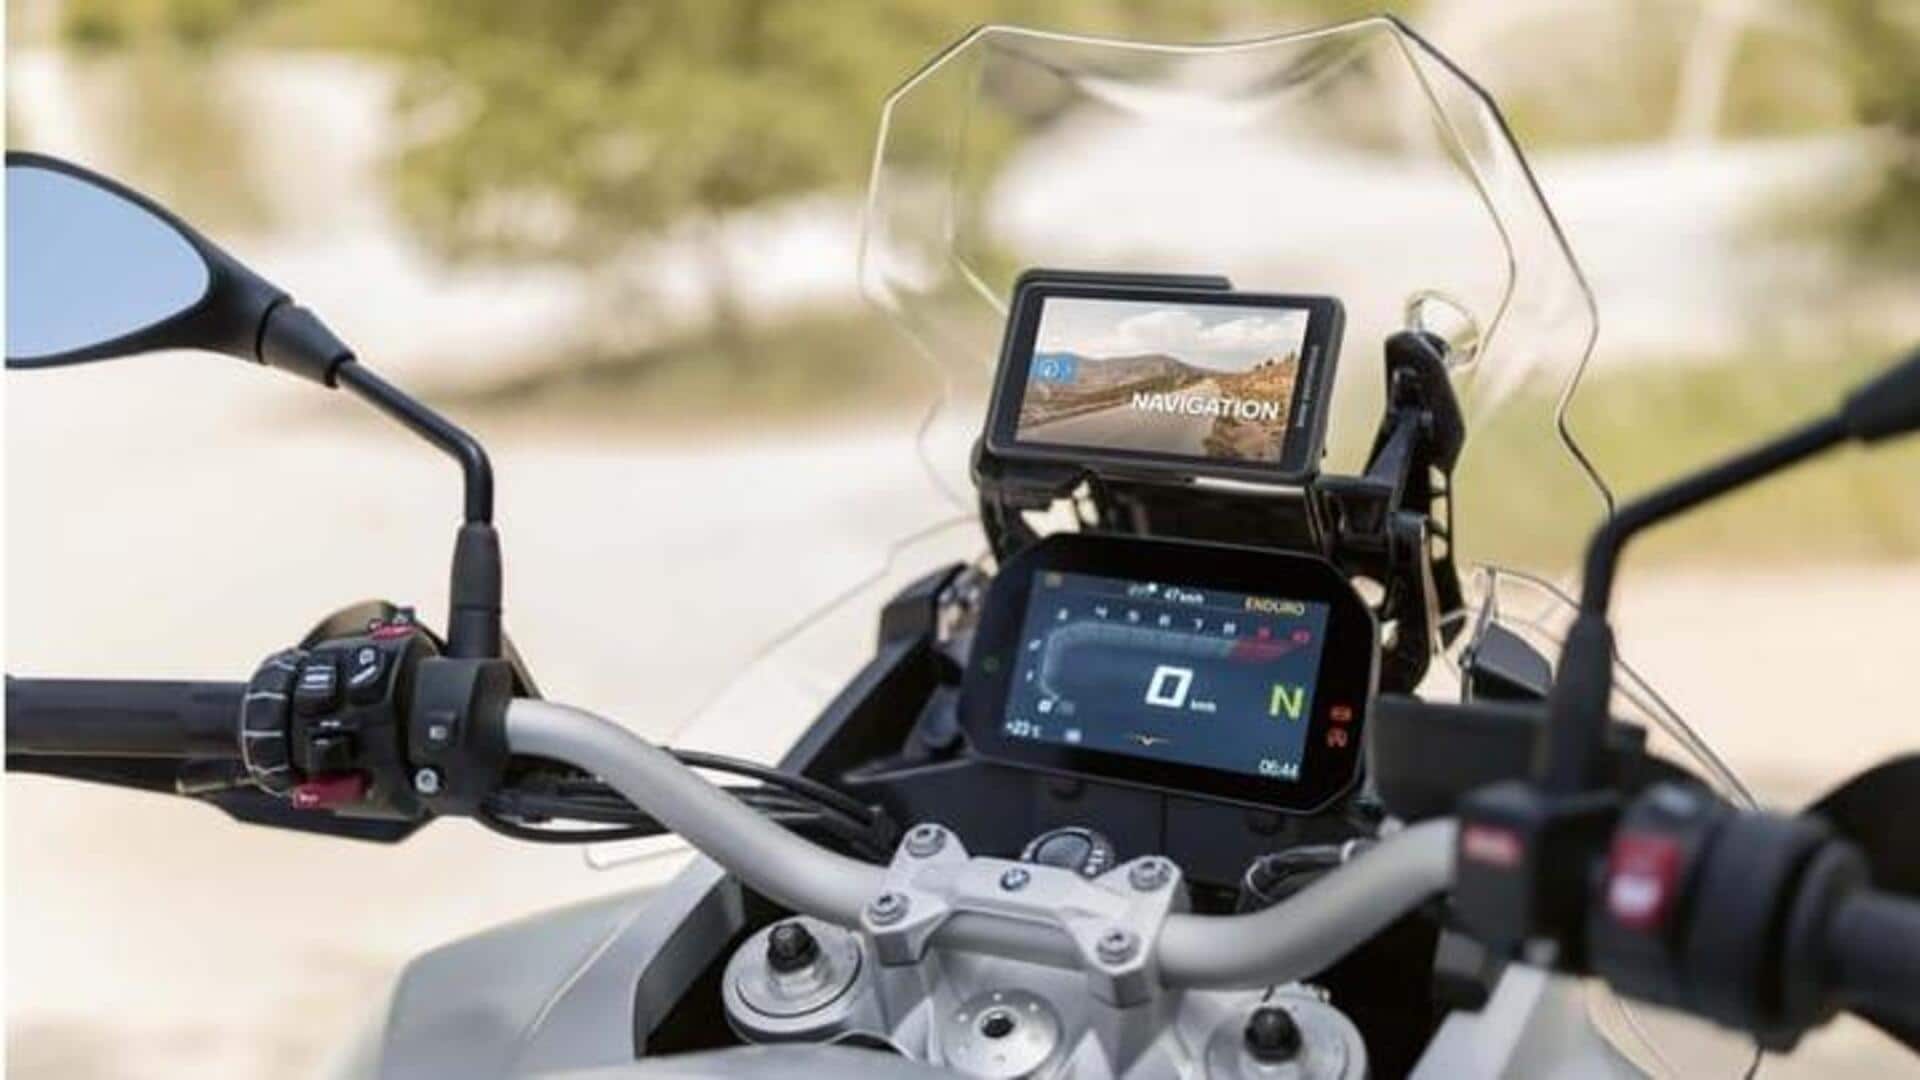 BMW Motorrad memperkenalkan unit ConnectedRide Navigator baru